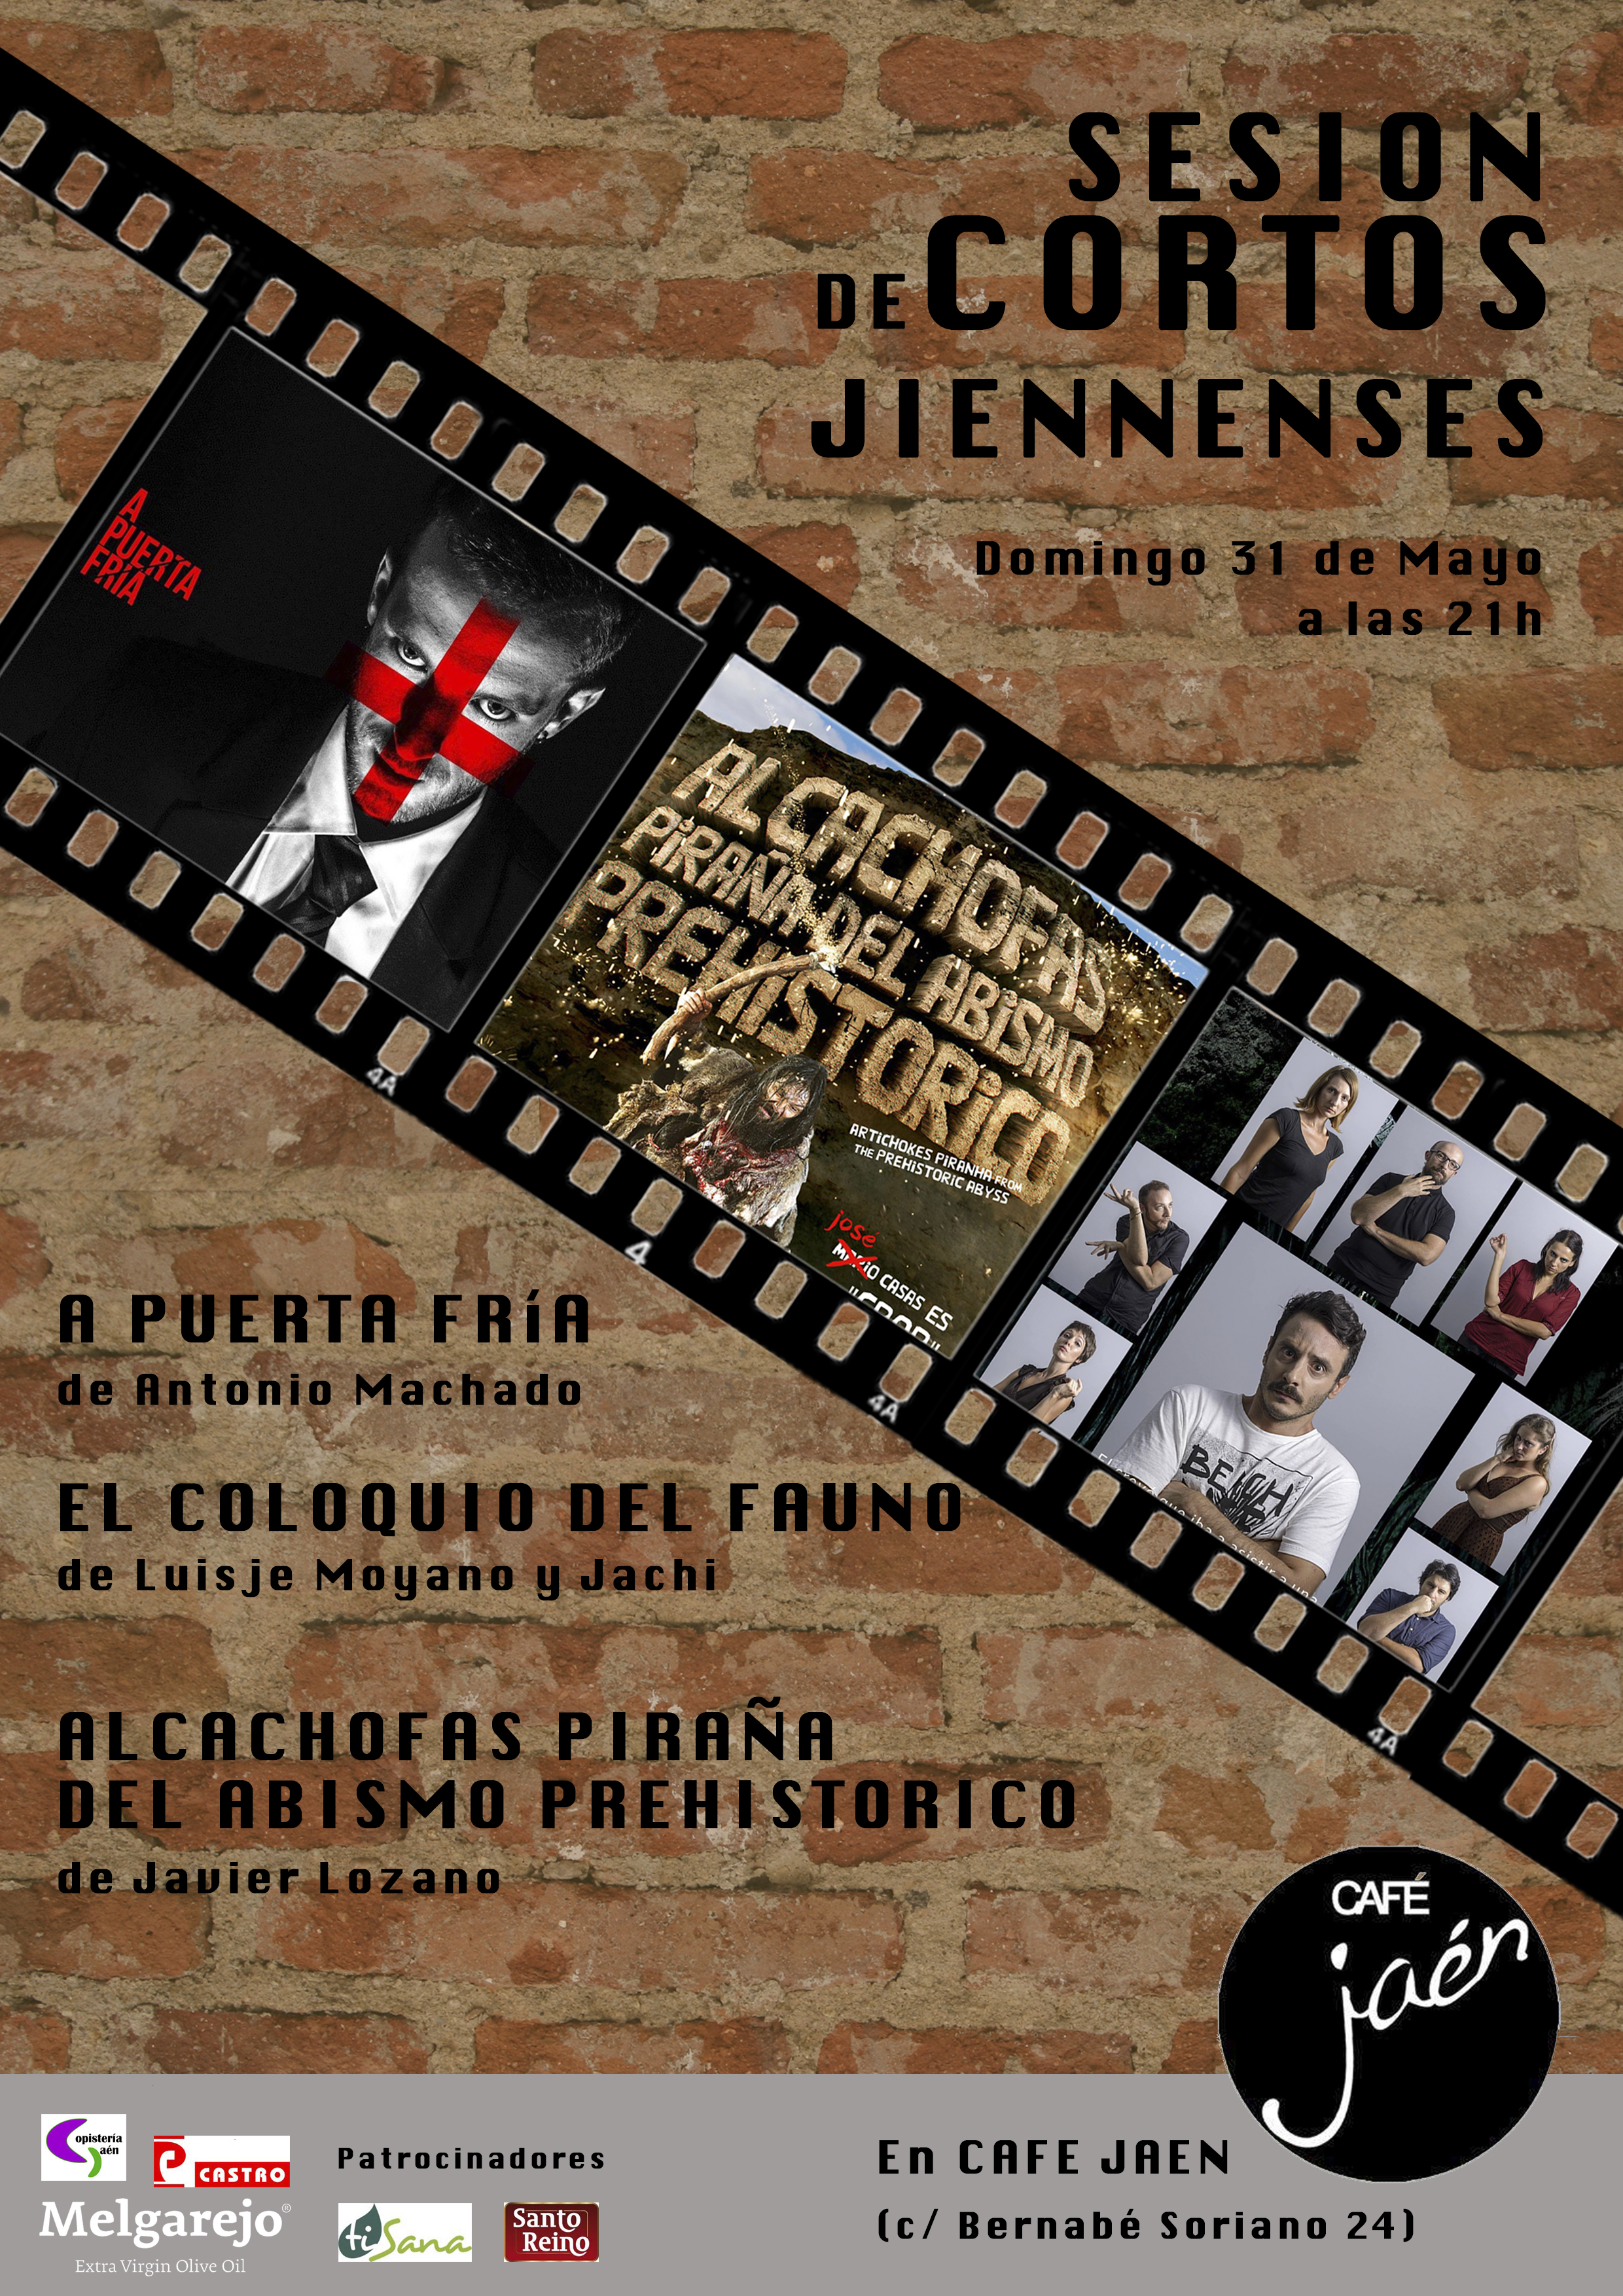 Sesión de cortos jiennenses en Café Jaén (Jaén)